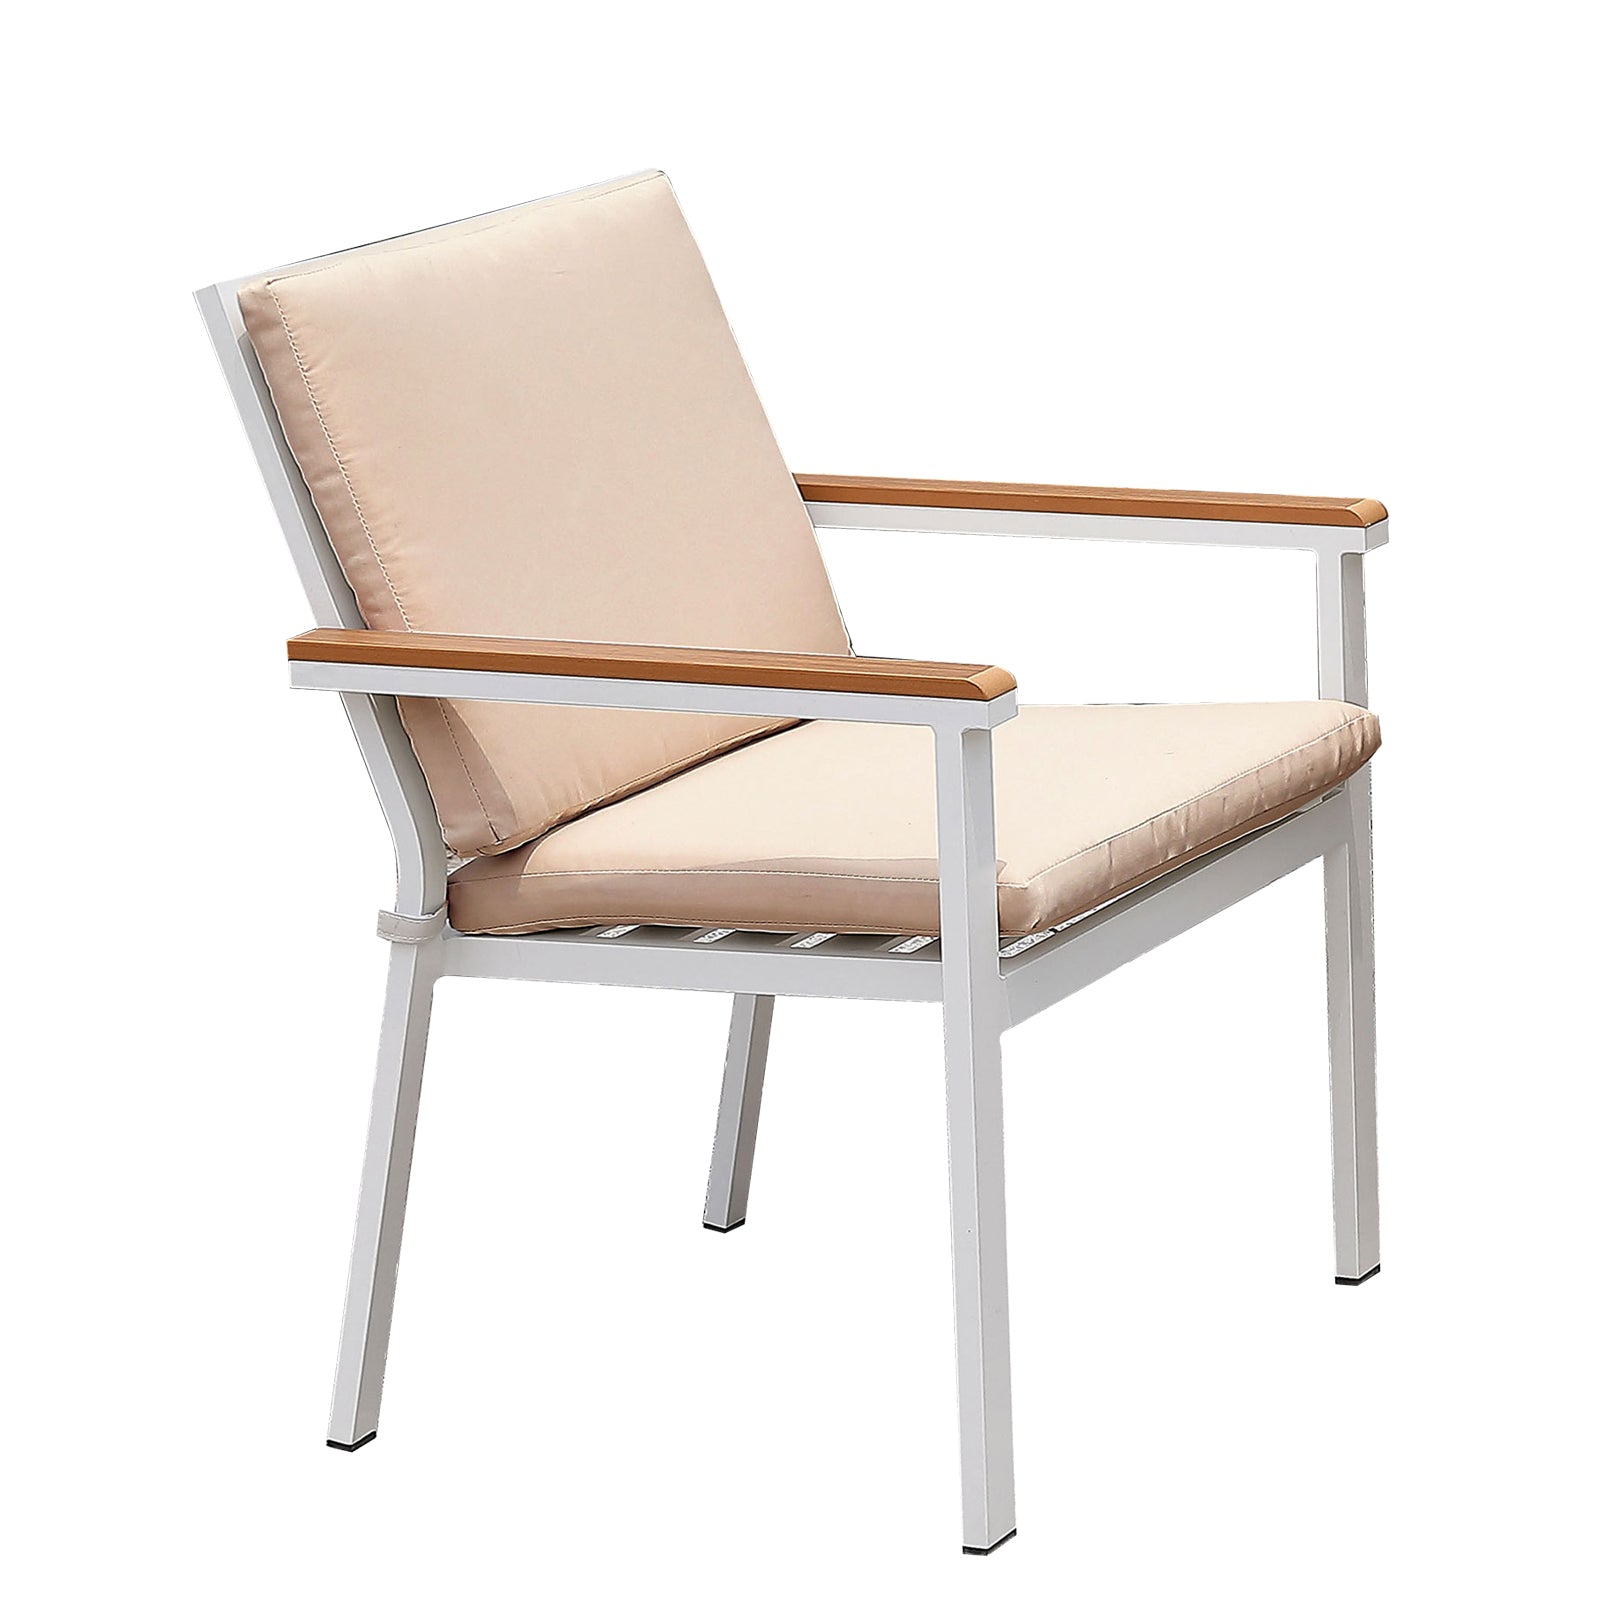 27 Inch Aluminum Frame Arm Chair, Outdoor,